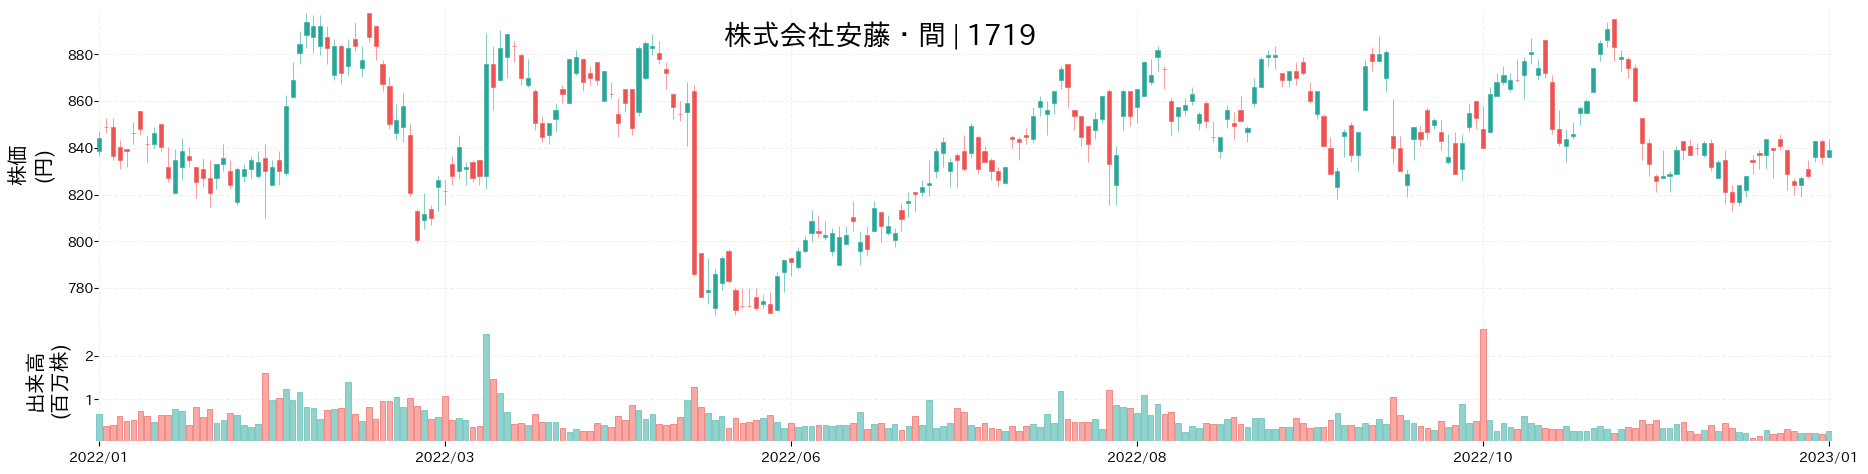 安藤・間の株価推移(2022)